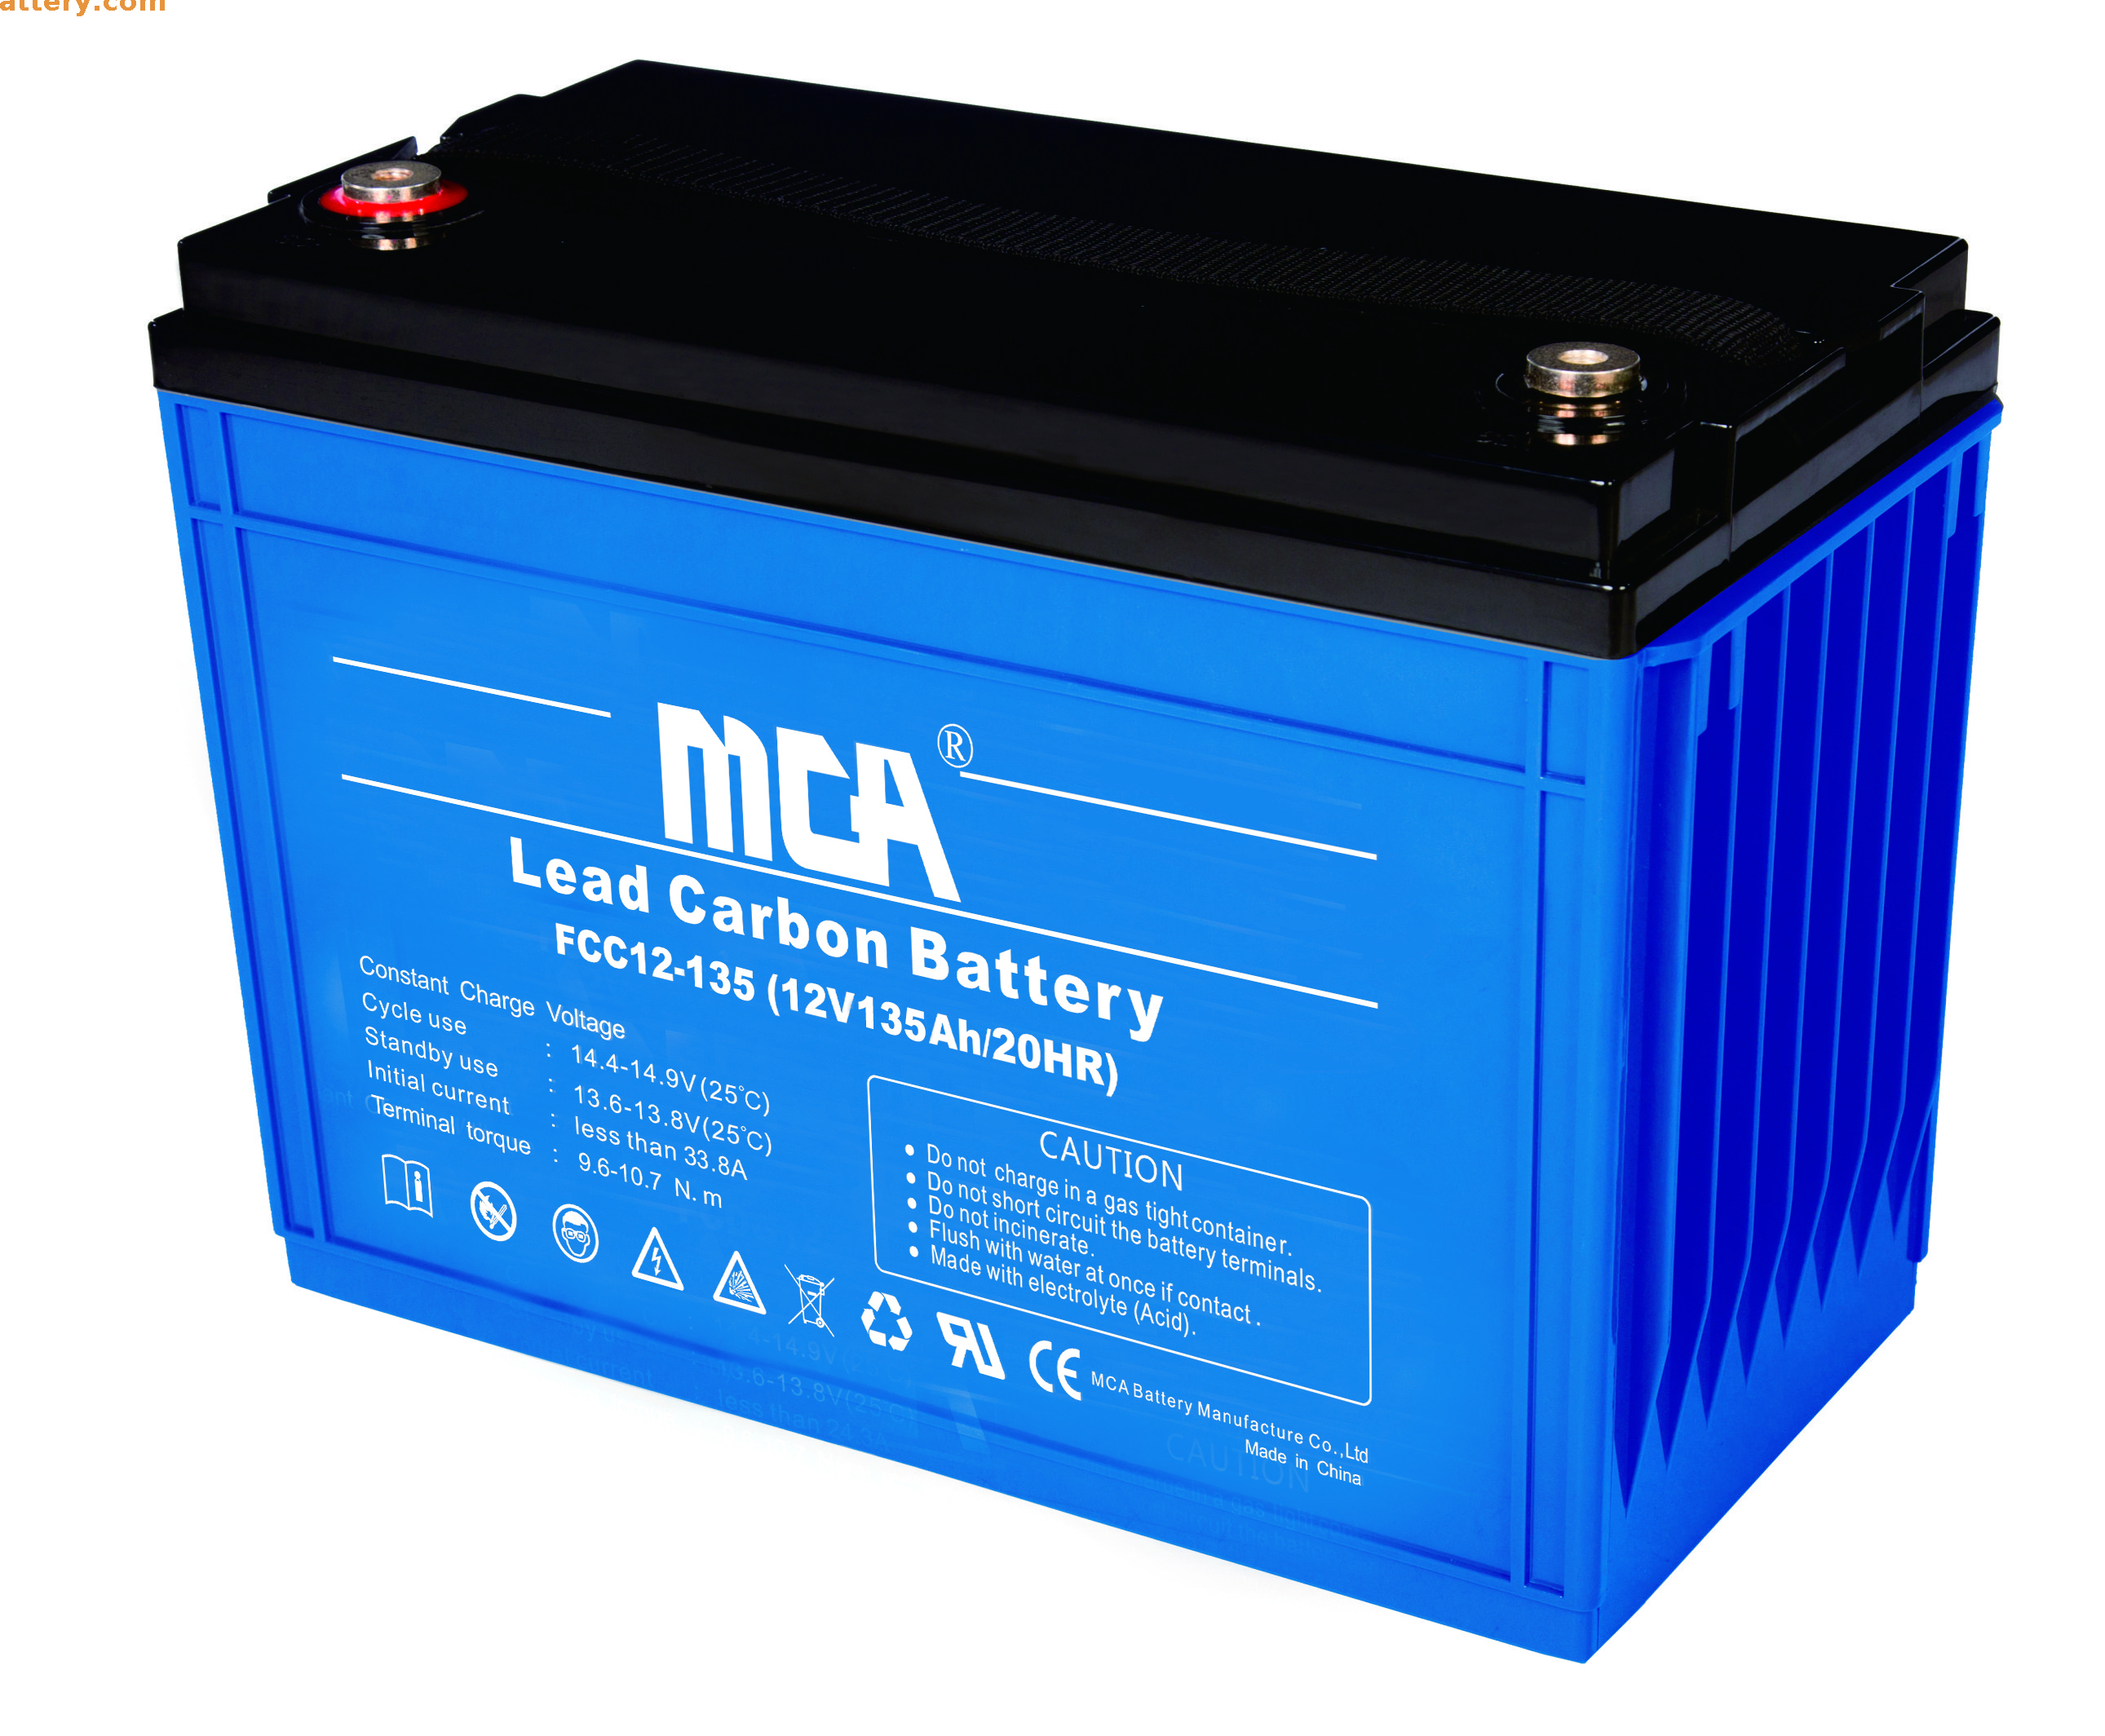 Carbon Enhanced Lead Acid Lead Carbon Battery 